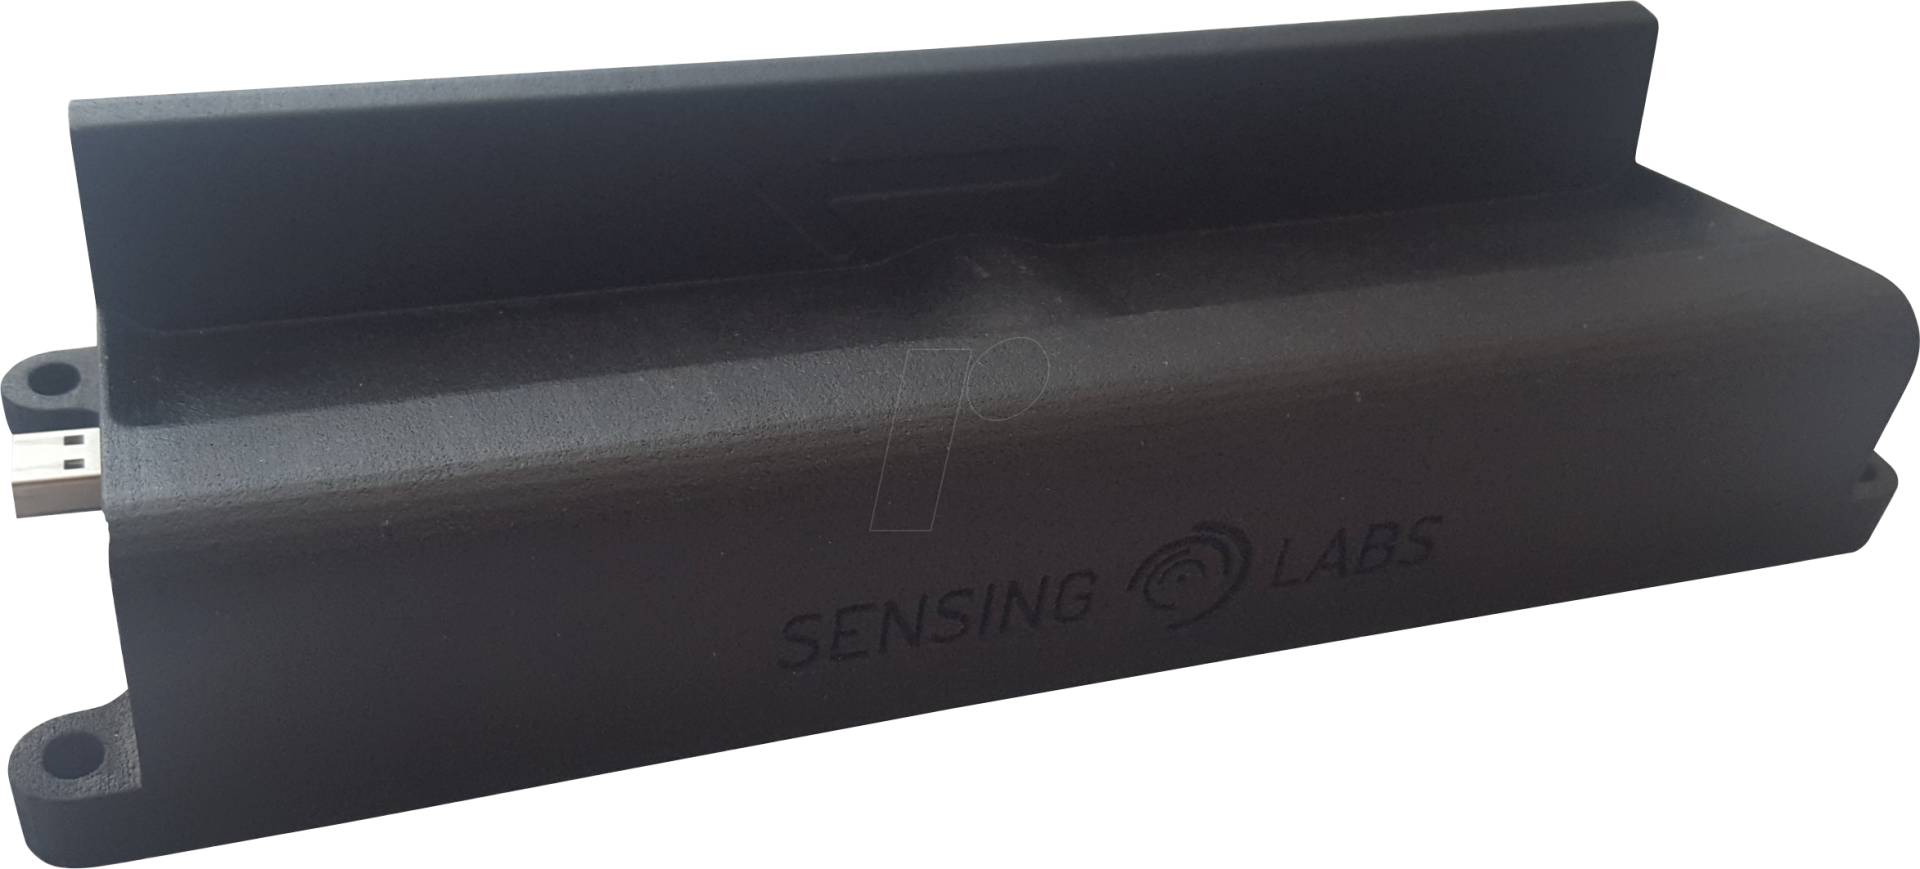 SL SLS-LAB-6NN1 - LoRaWAN Sensor Inbetriebnahme Kit von SENSING LABS